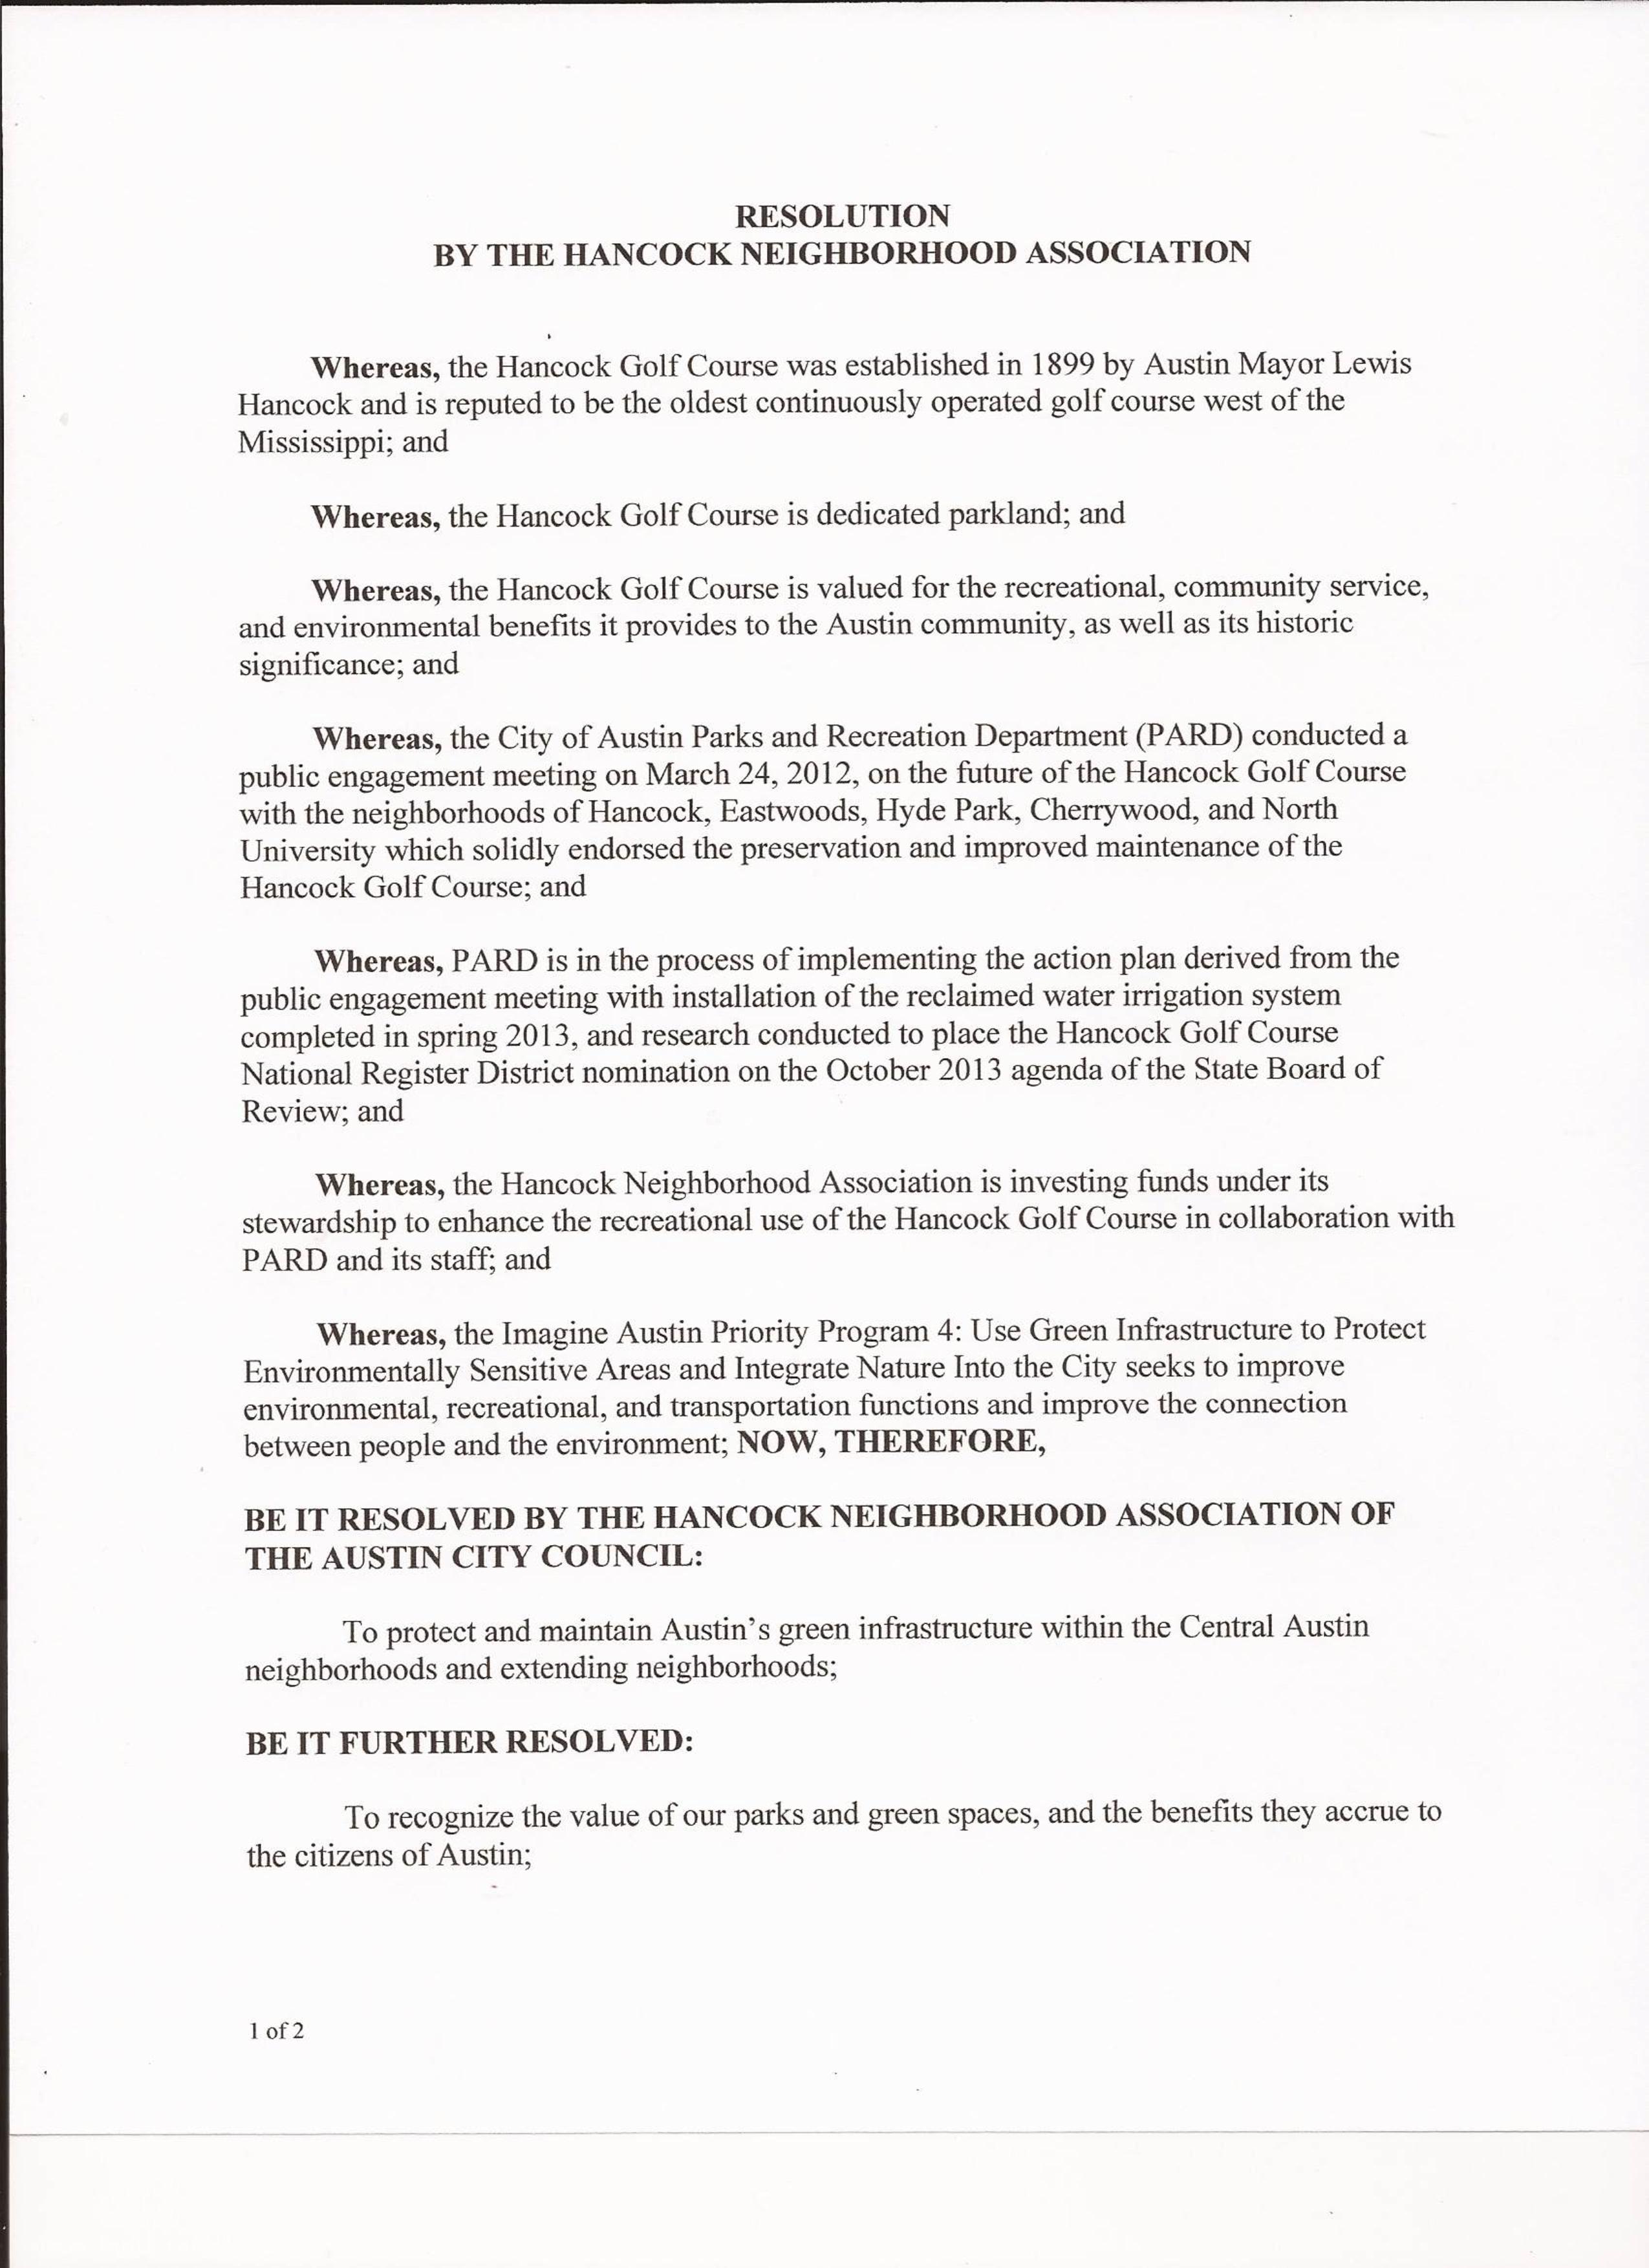 HNA  September 18, 2013 Parks Resolution